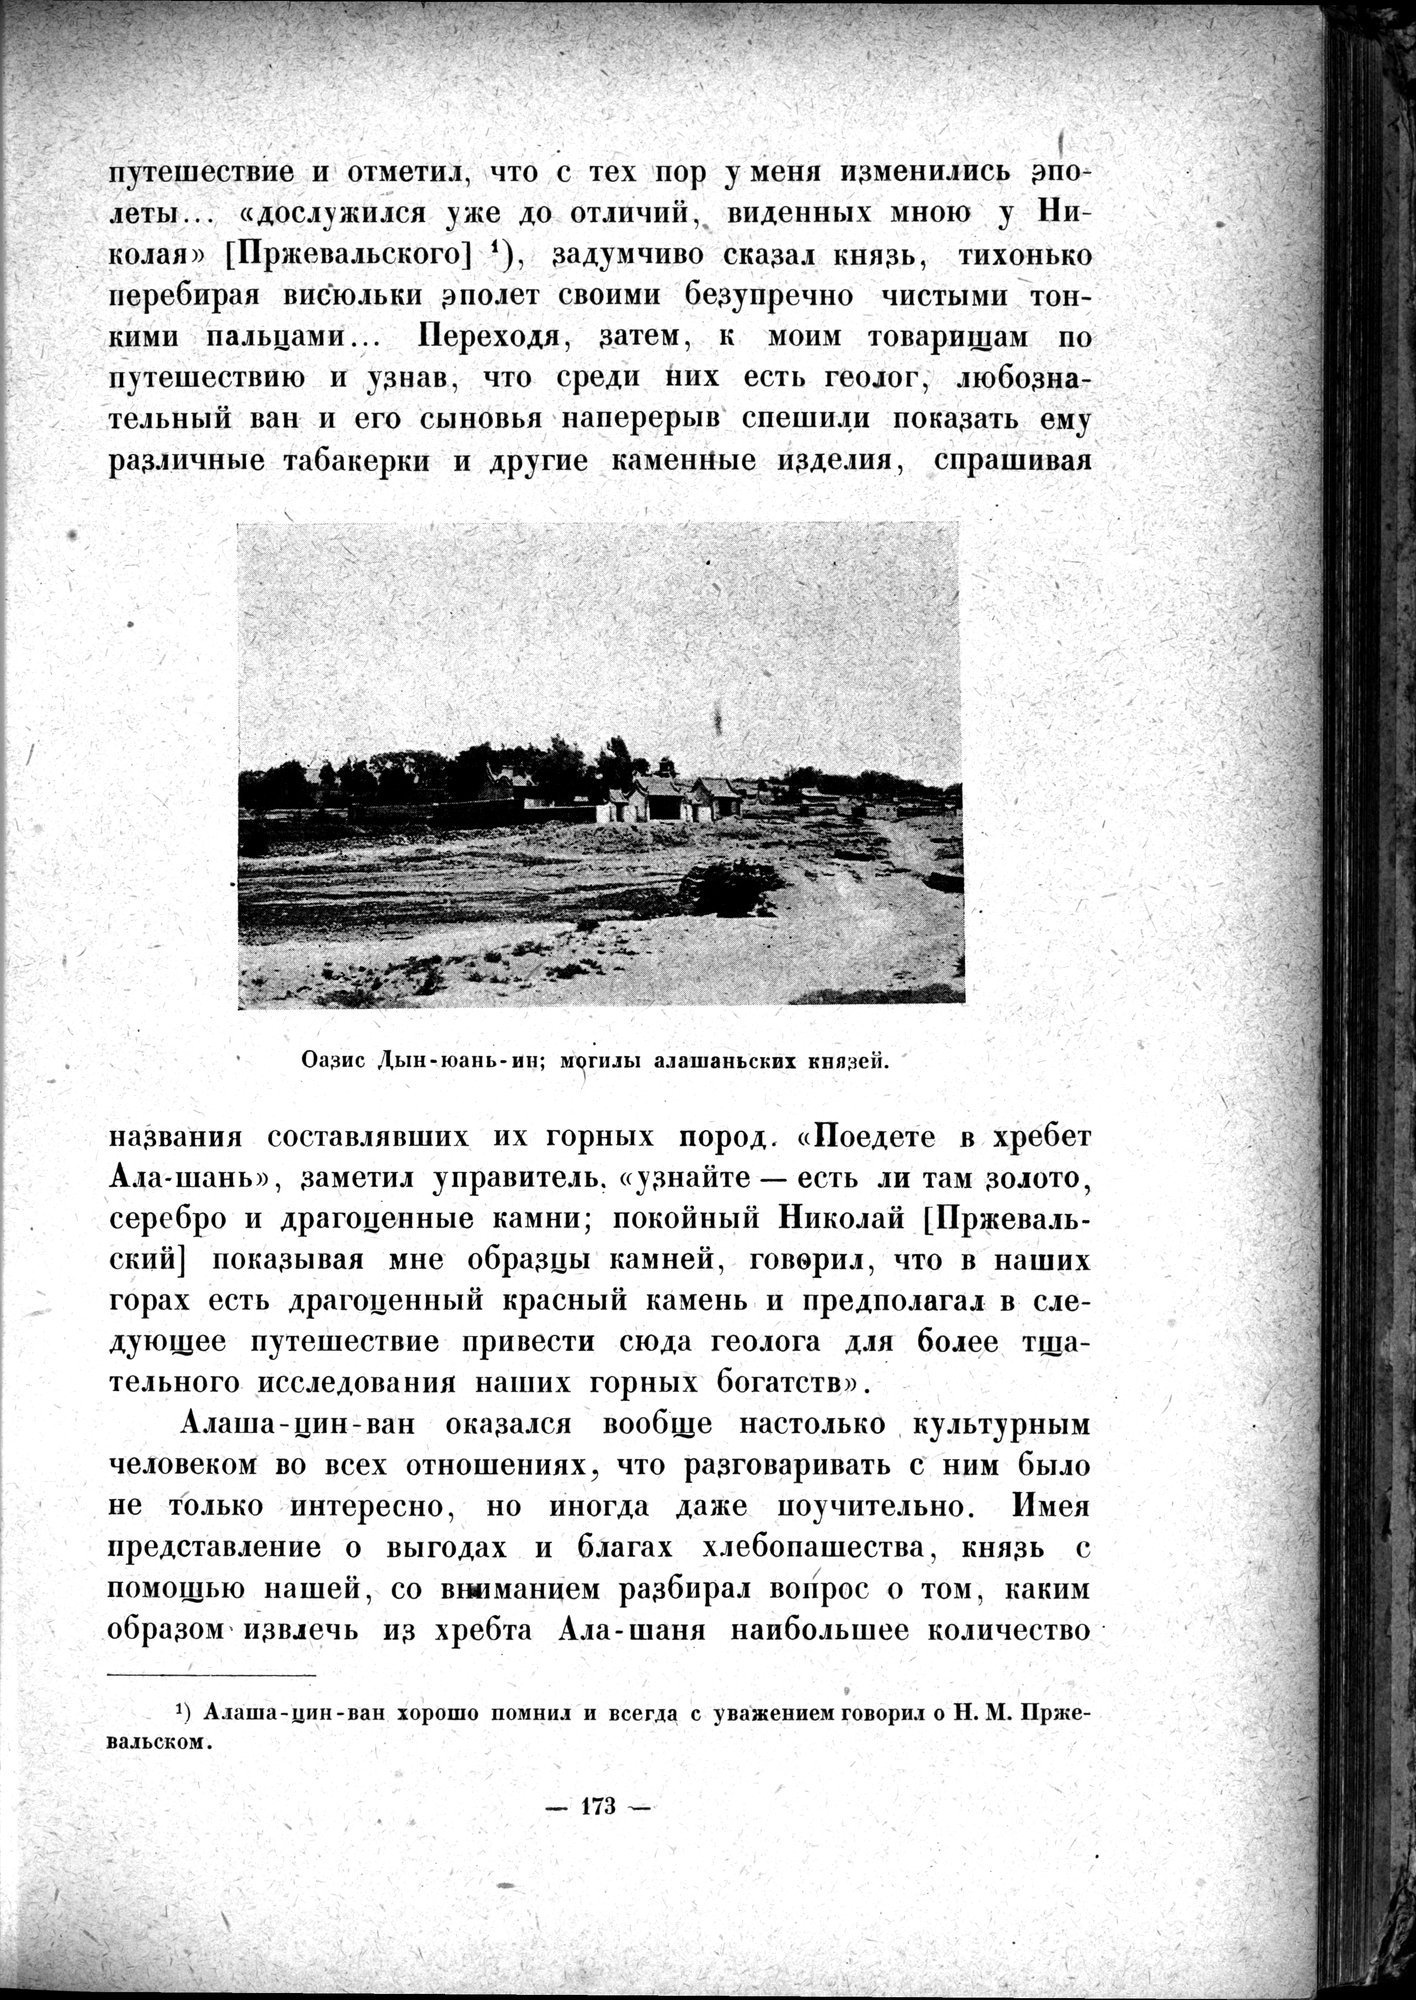 Mongoliya i Amdo i mertby gorod Khara-Khoto : vol.1 / Page 207 (Grayscale High Resolution Image)